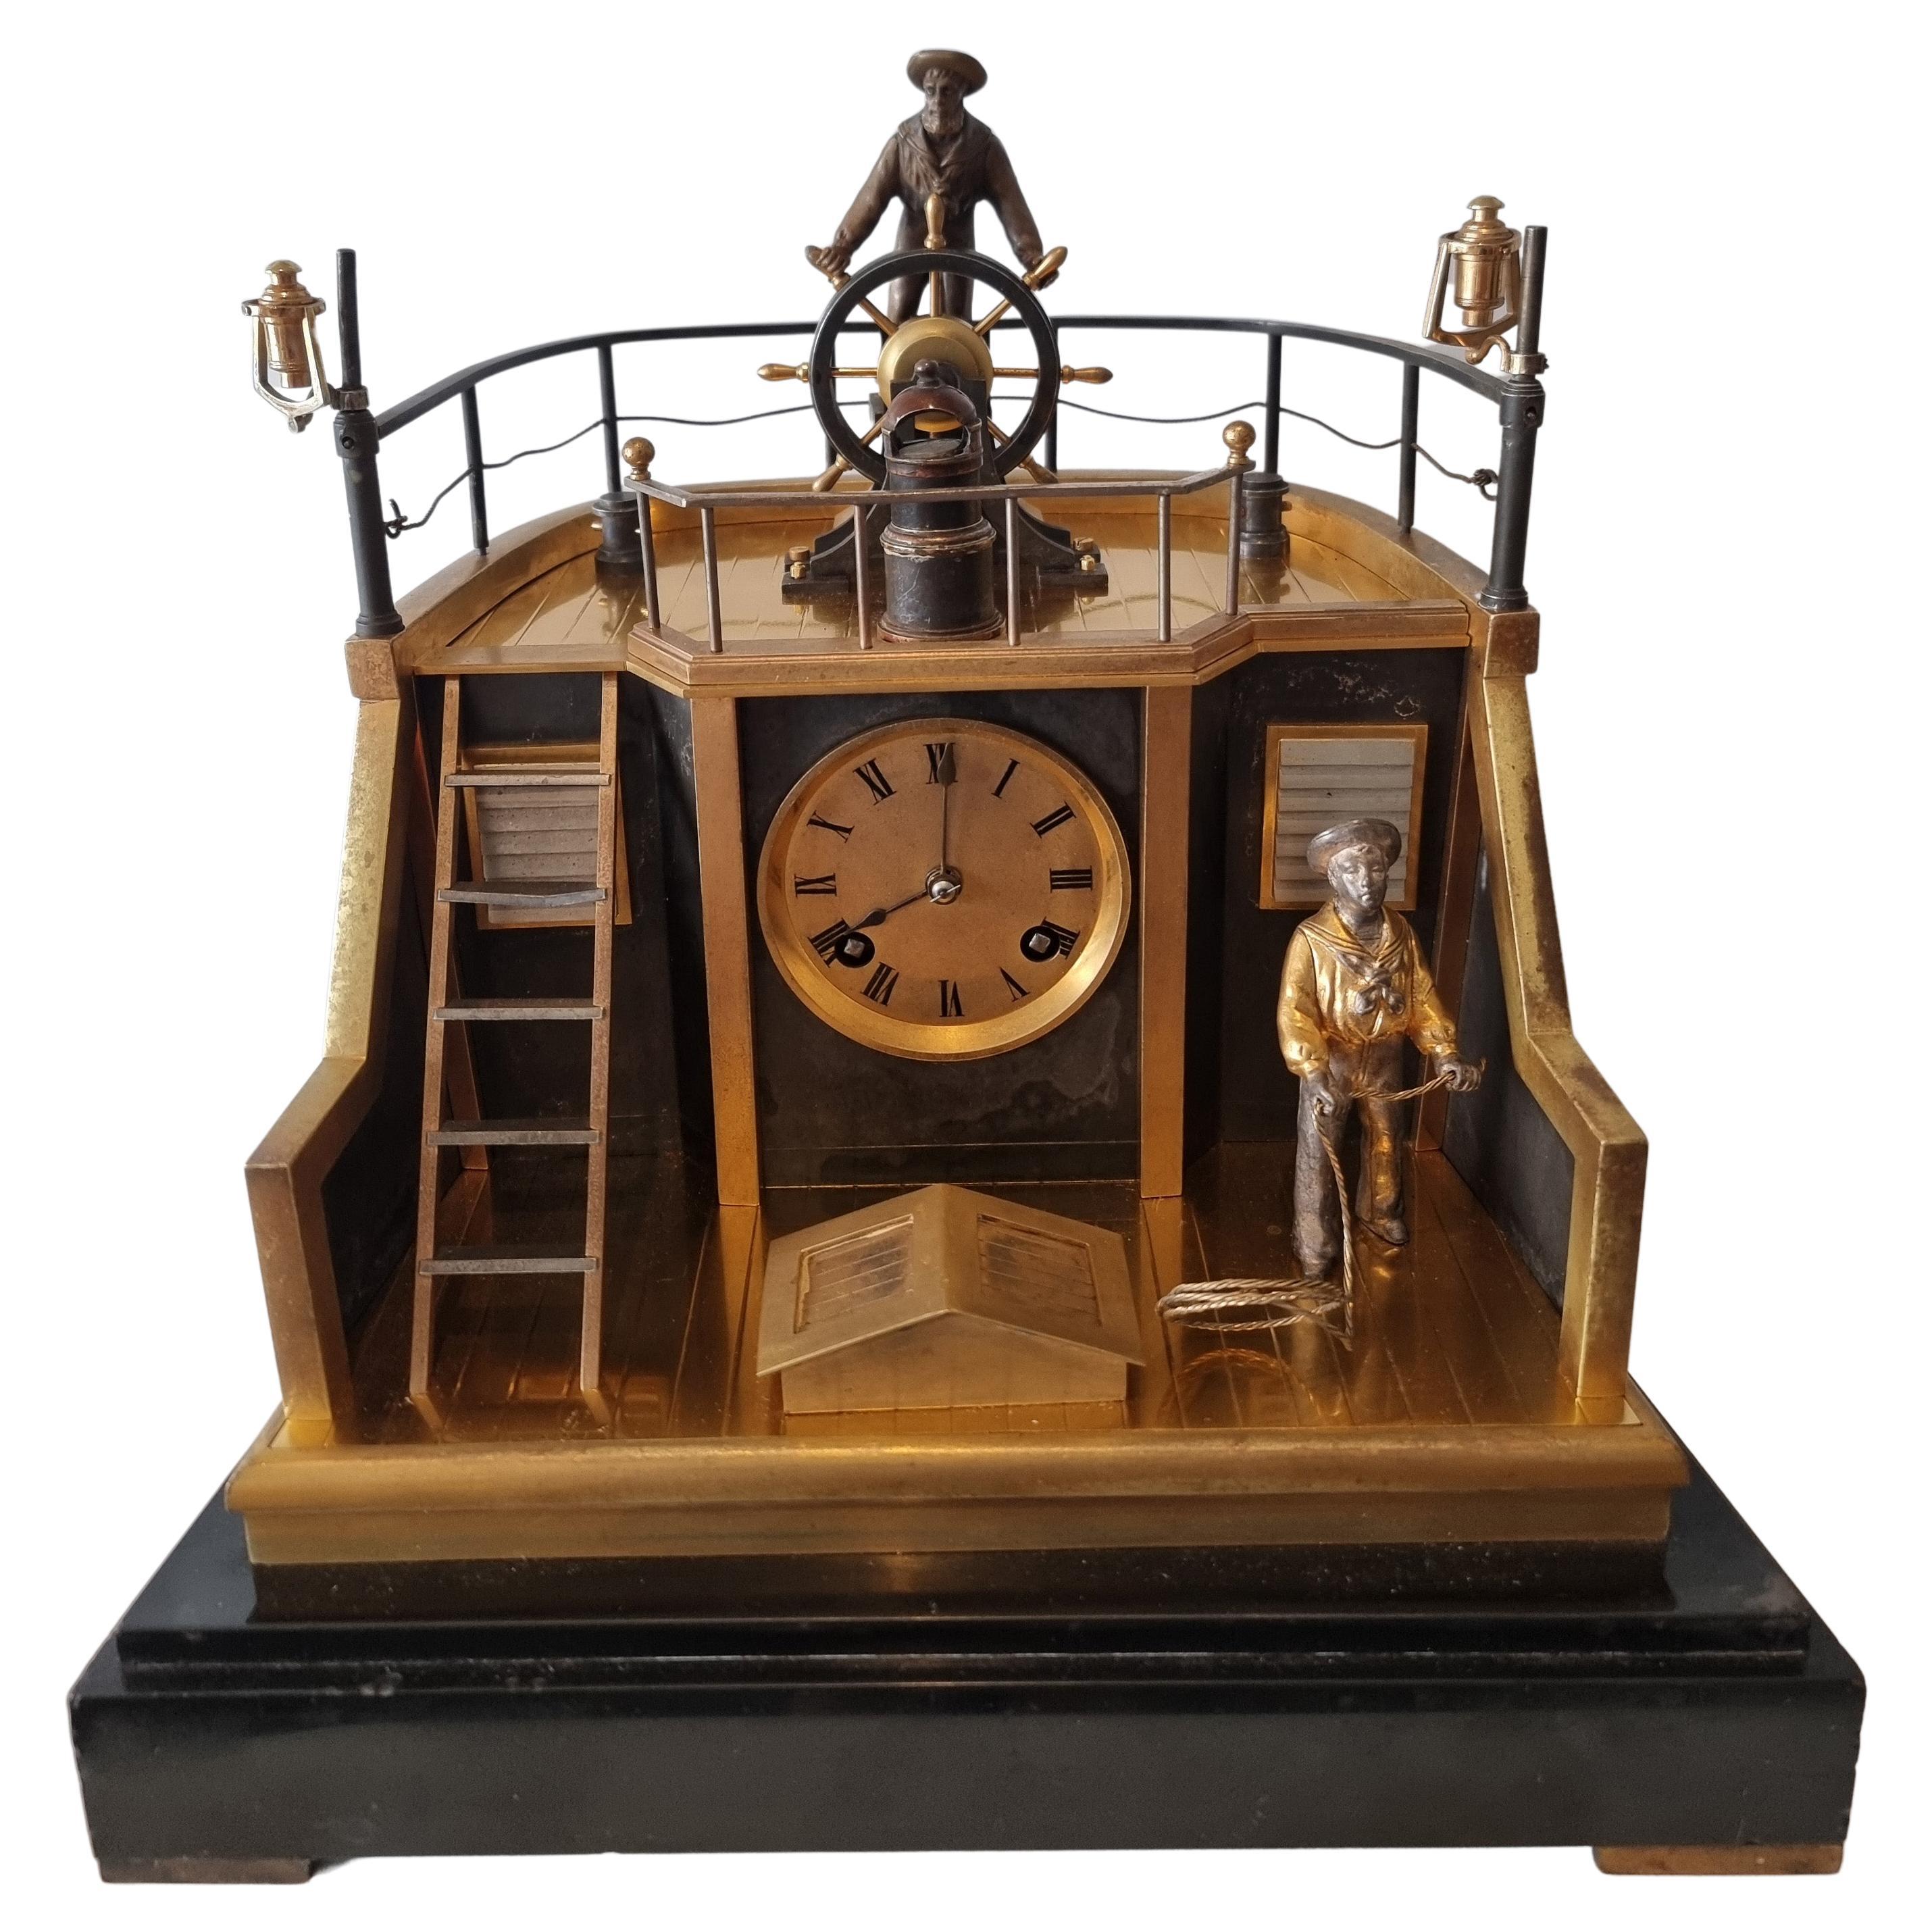 Automaton Industrial series Quarterdeck, Helmsman mantel clock by Guilmet